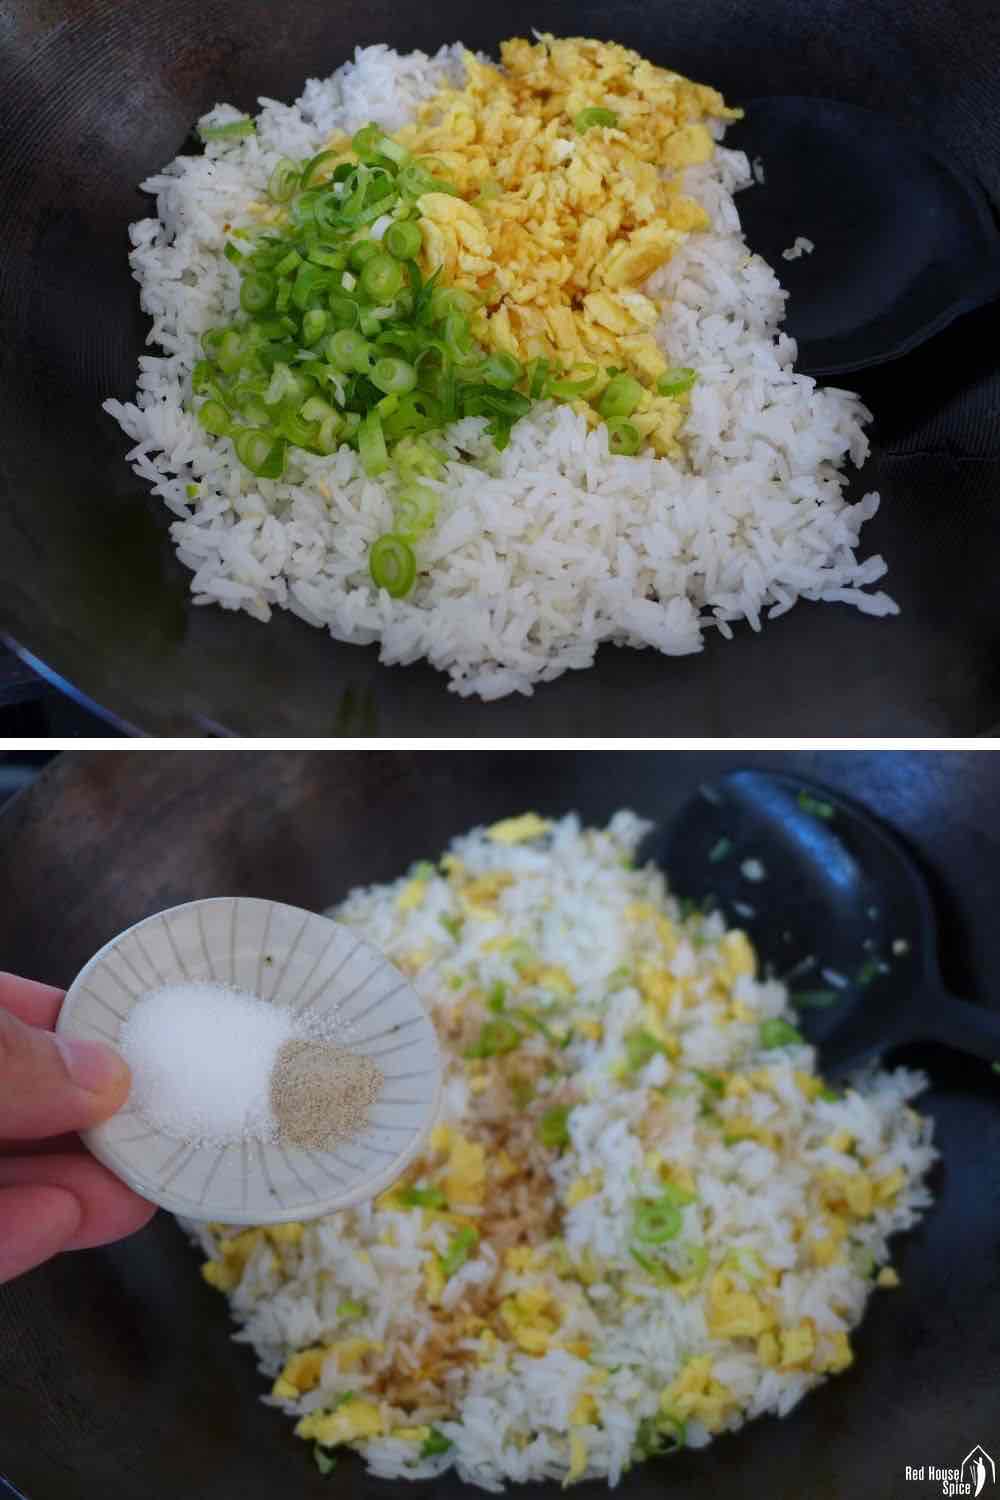 Adding scallions, scrambled egg and seasonings to rice.